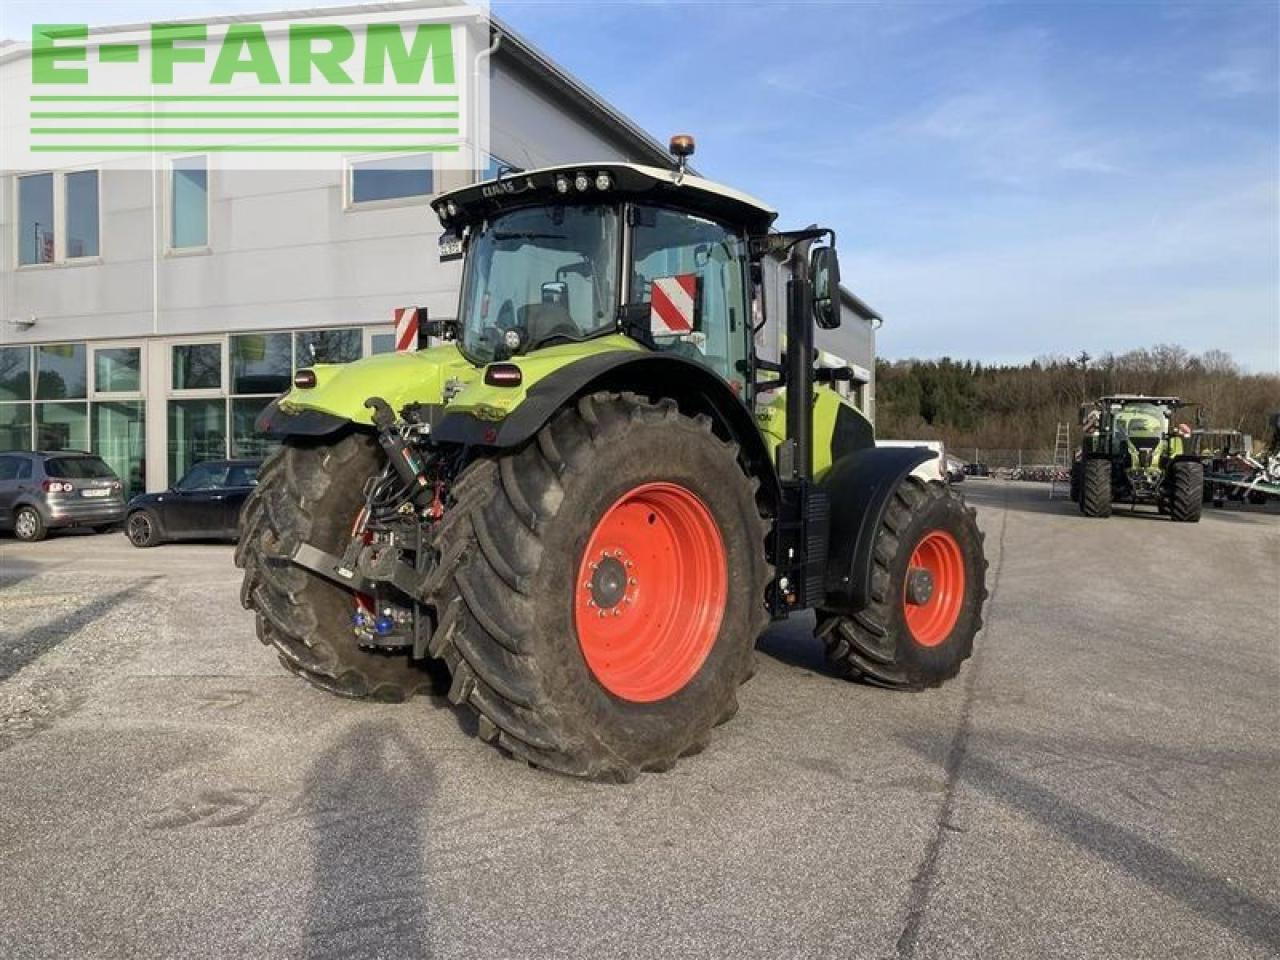 Farm tractor CLAAS axion 870 cmatic - stage v